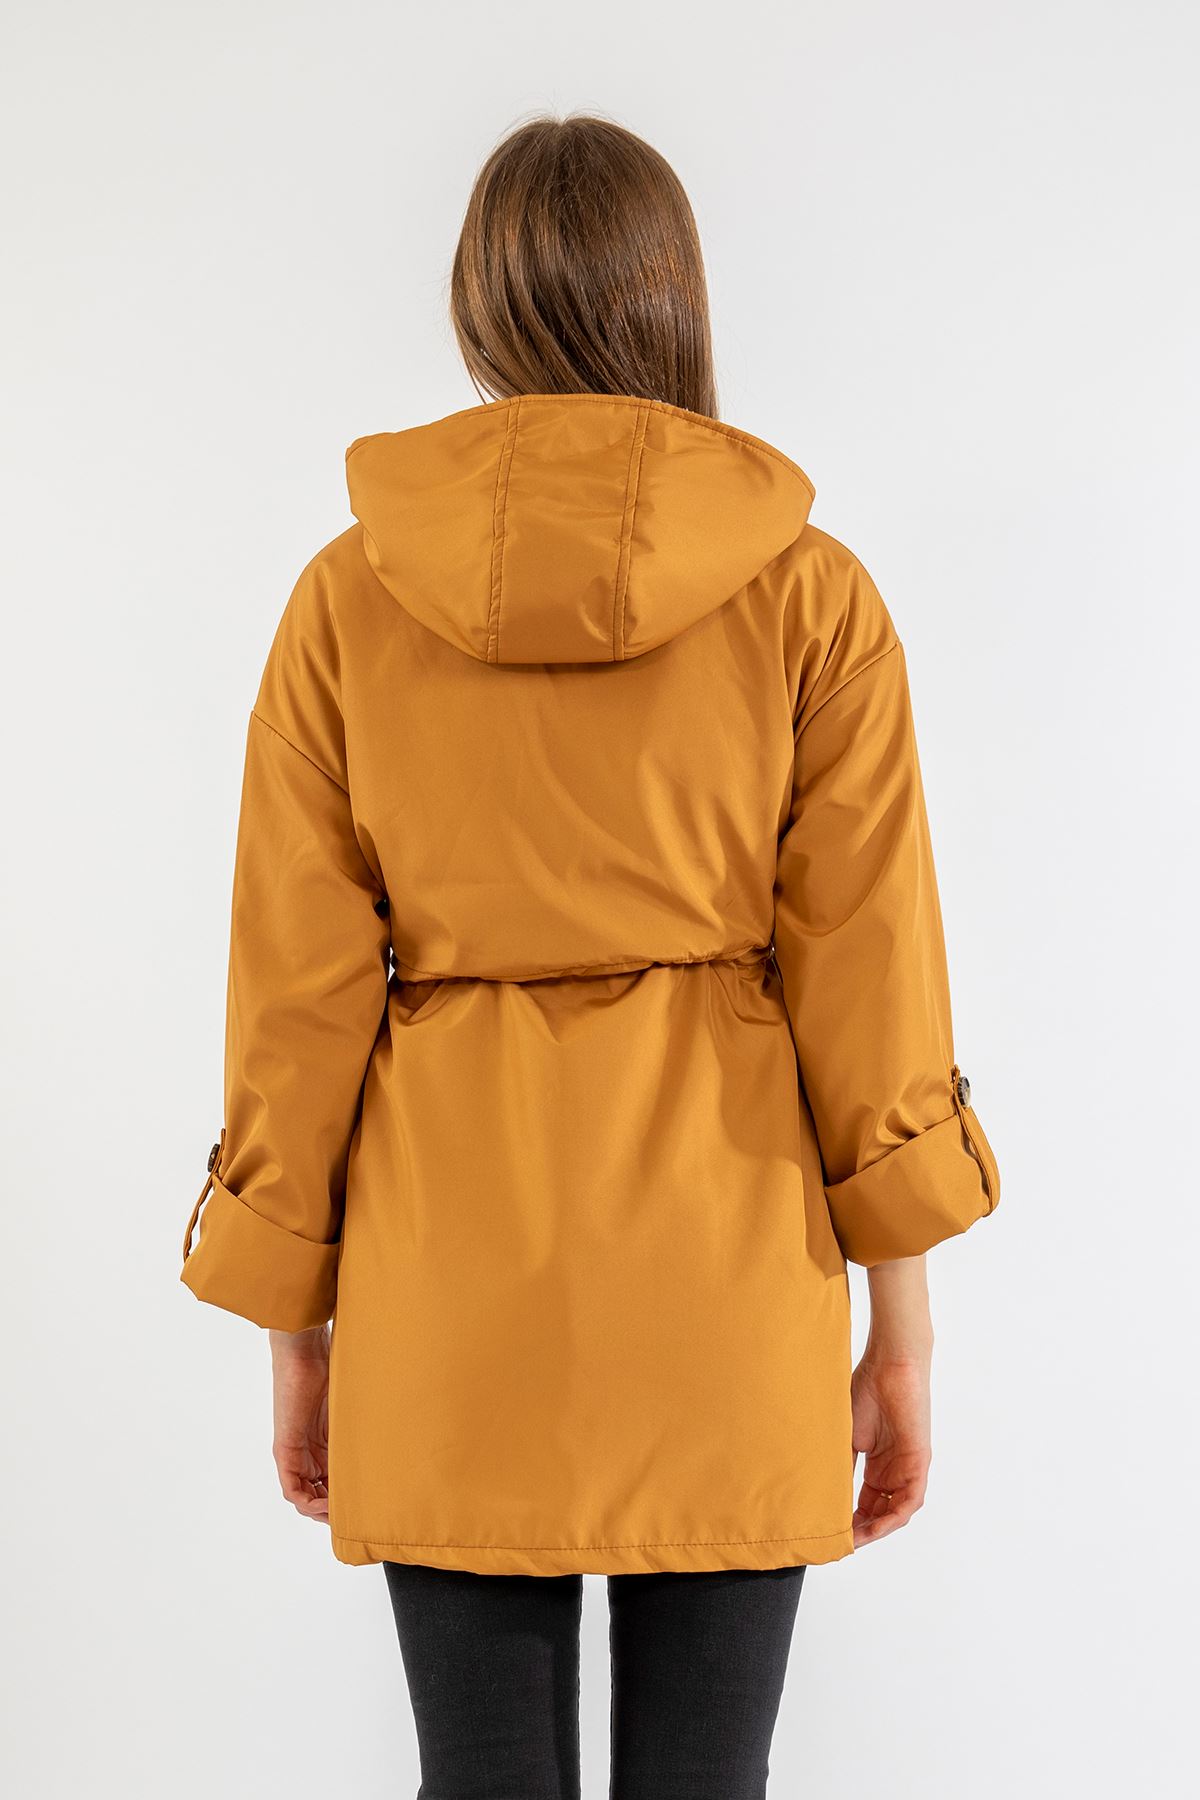 Long Sleeve Hooded Hip Height Oversize Plush Women Raincoat - Mustard